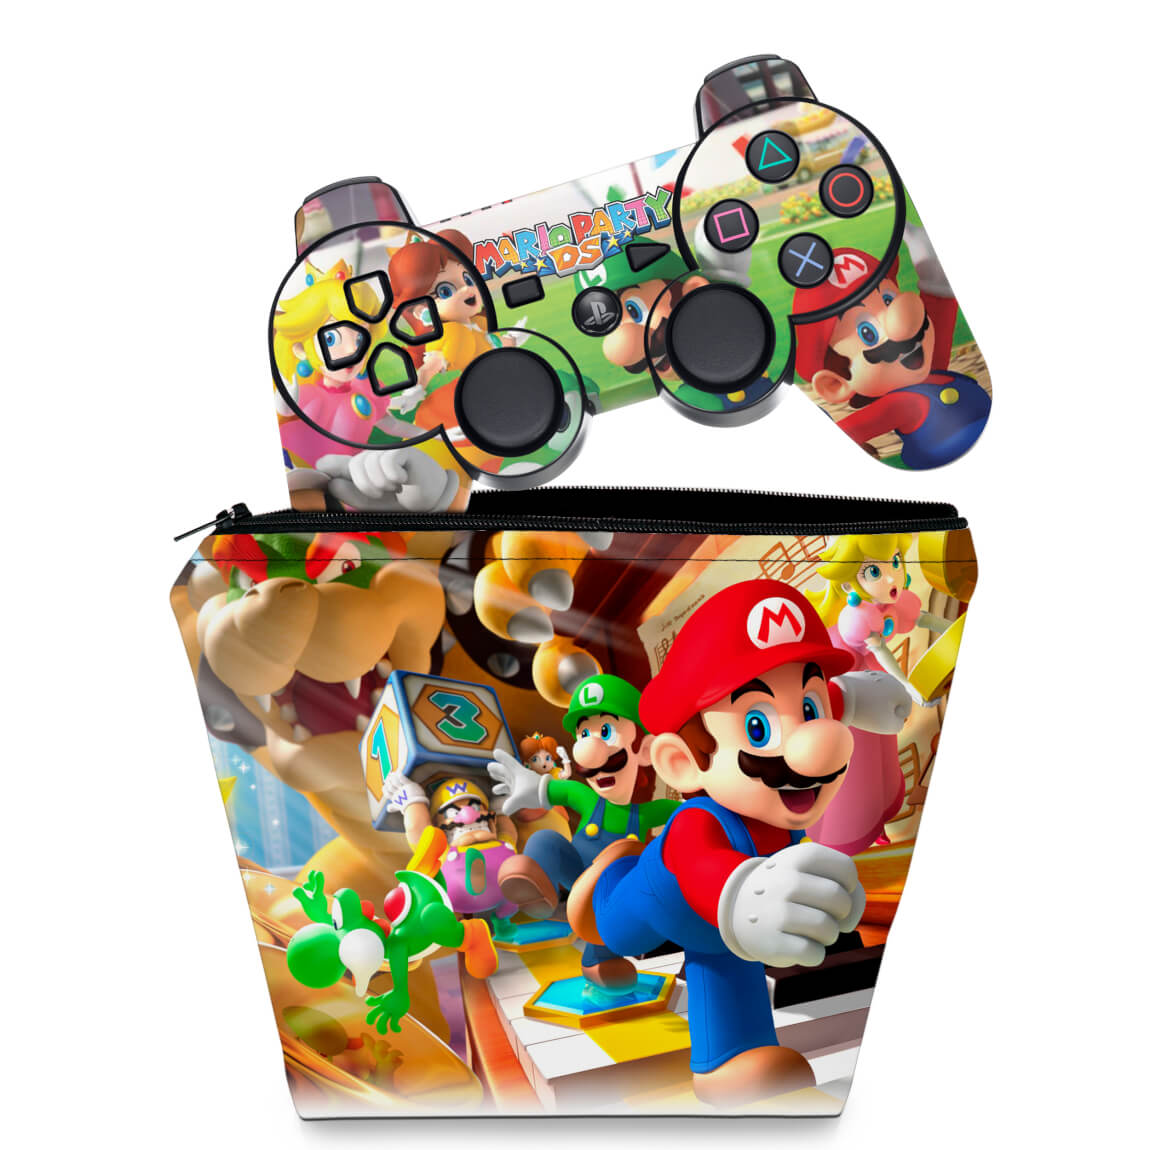 KIT Capa Case e Skin PS3 Controle - Mario Party - Pop Arte Skins